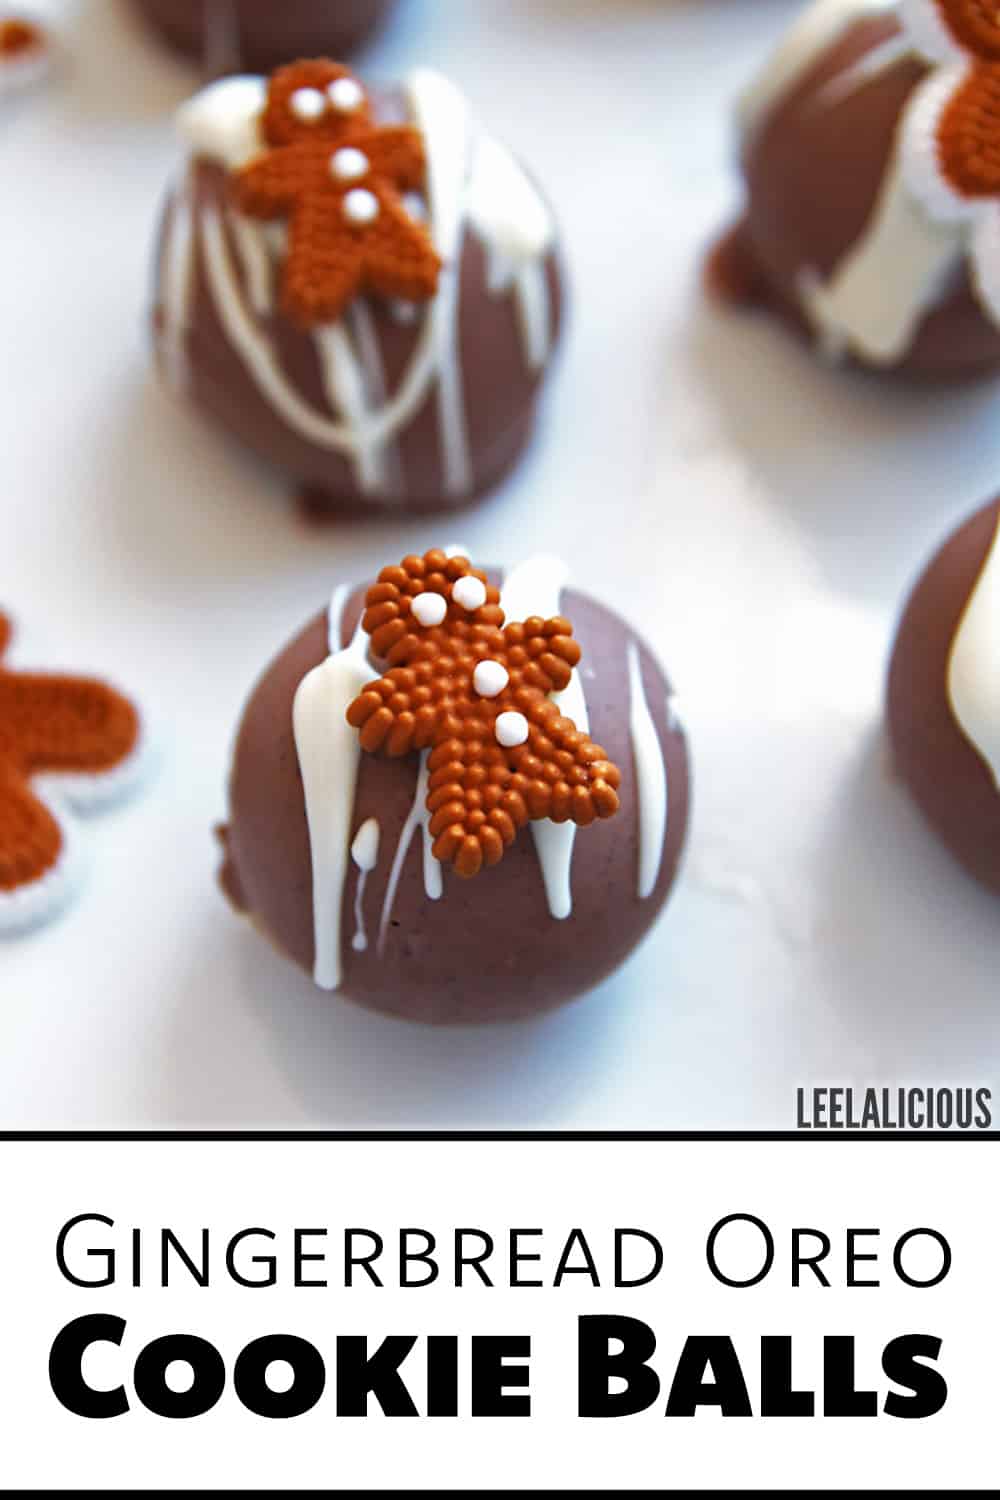 Gingerbread Oreo Cookie Balls Recipe » LeelaLicious